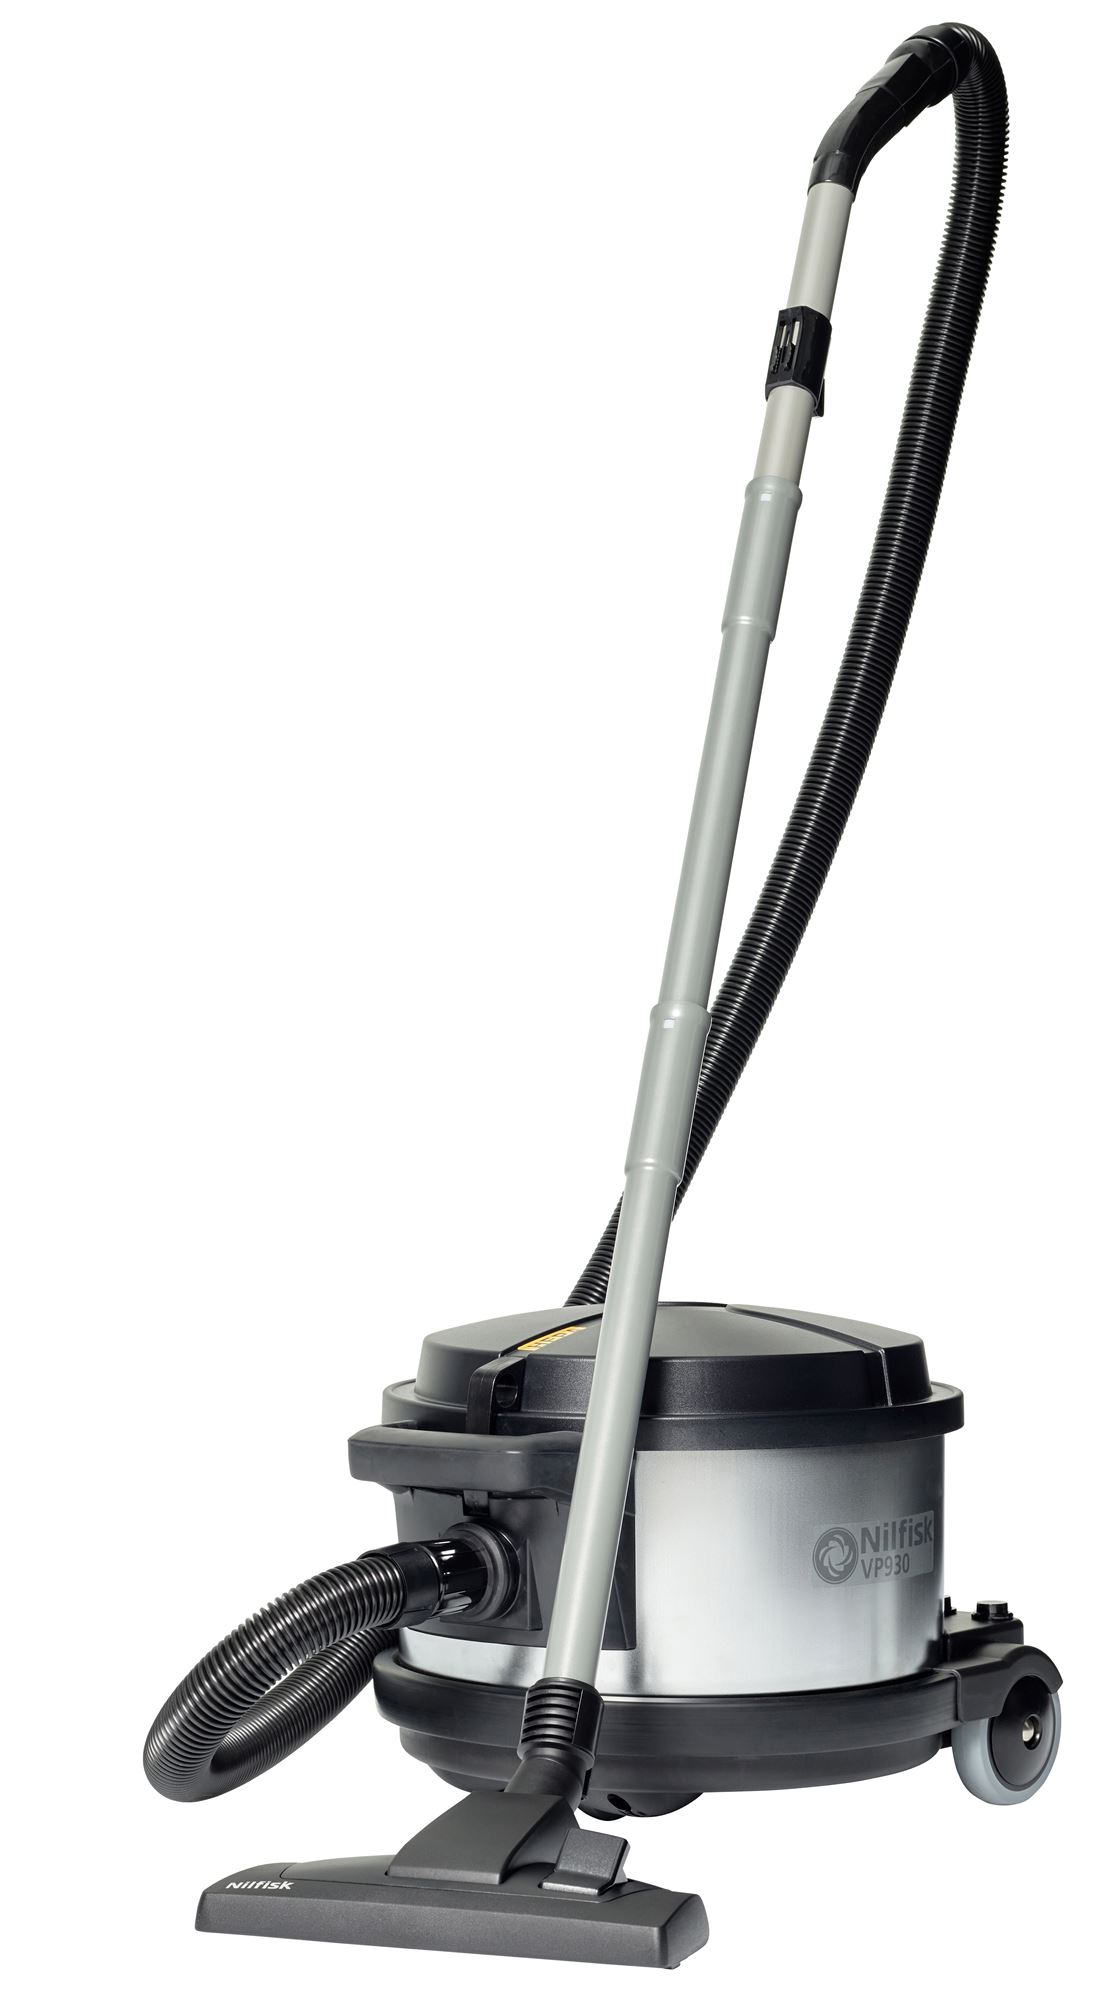 Nilfisk VP930 promo vacuum